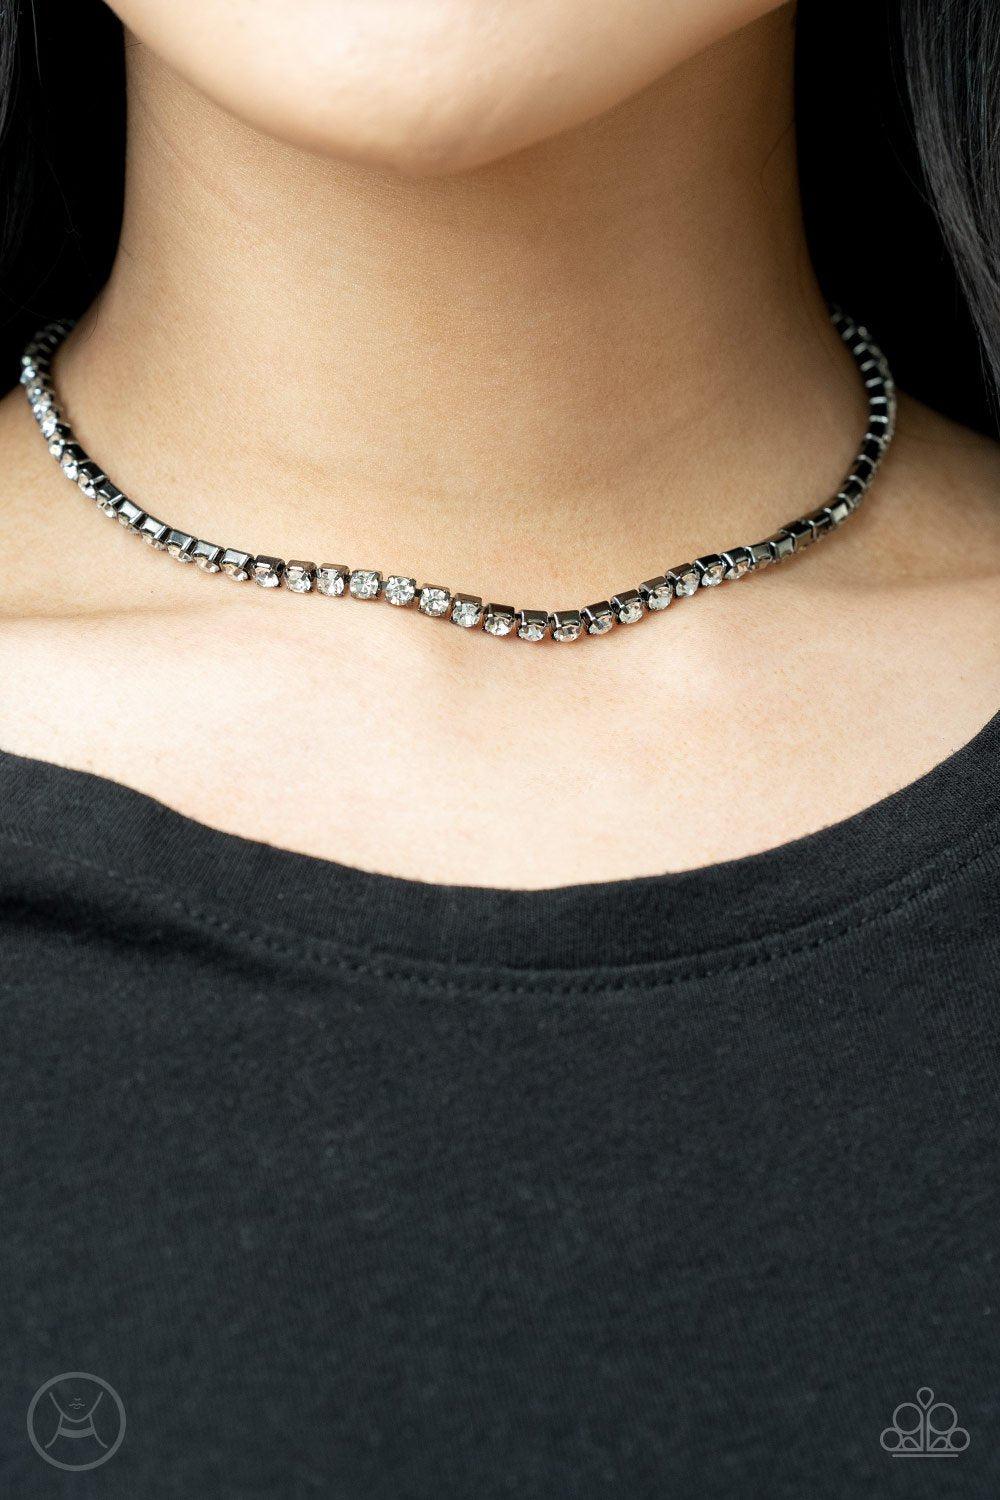 Starlight Radiance Gunmetal Black and White Rhinestone Choker Necklace - Paparazzi Accessories- model - CarasShop.com - $5 Jewelry by Cara Jewels